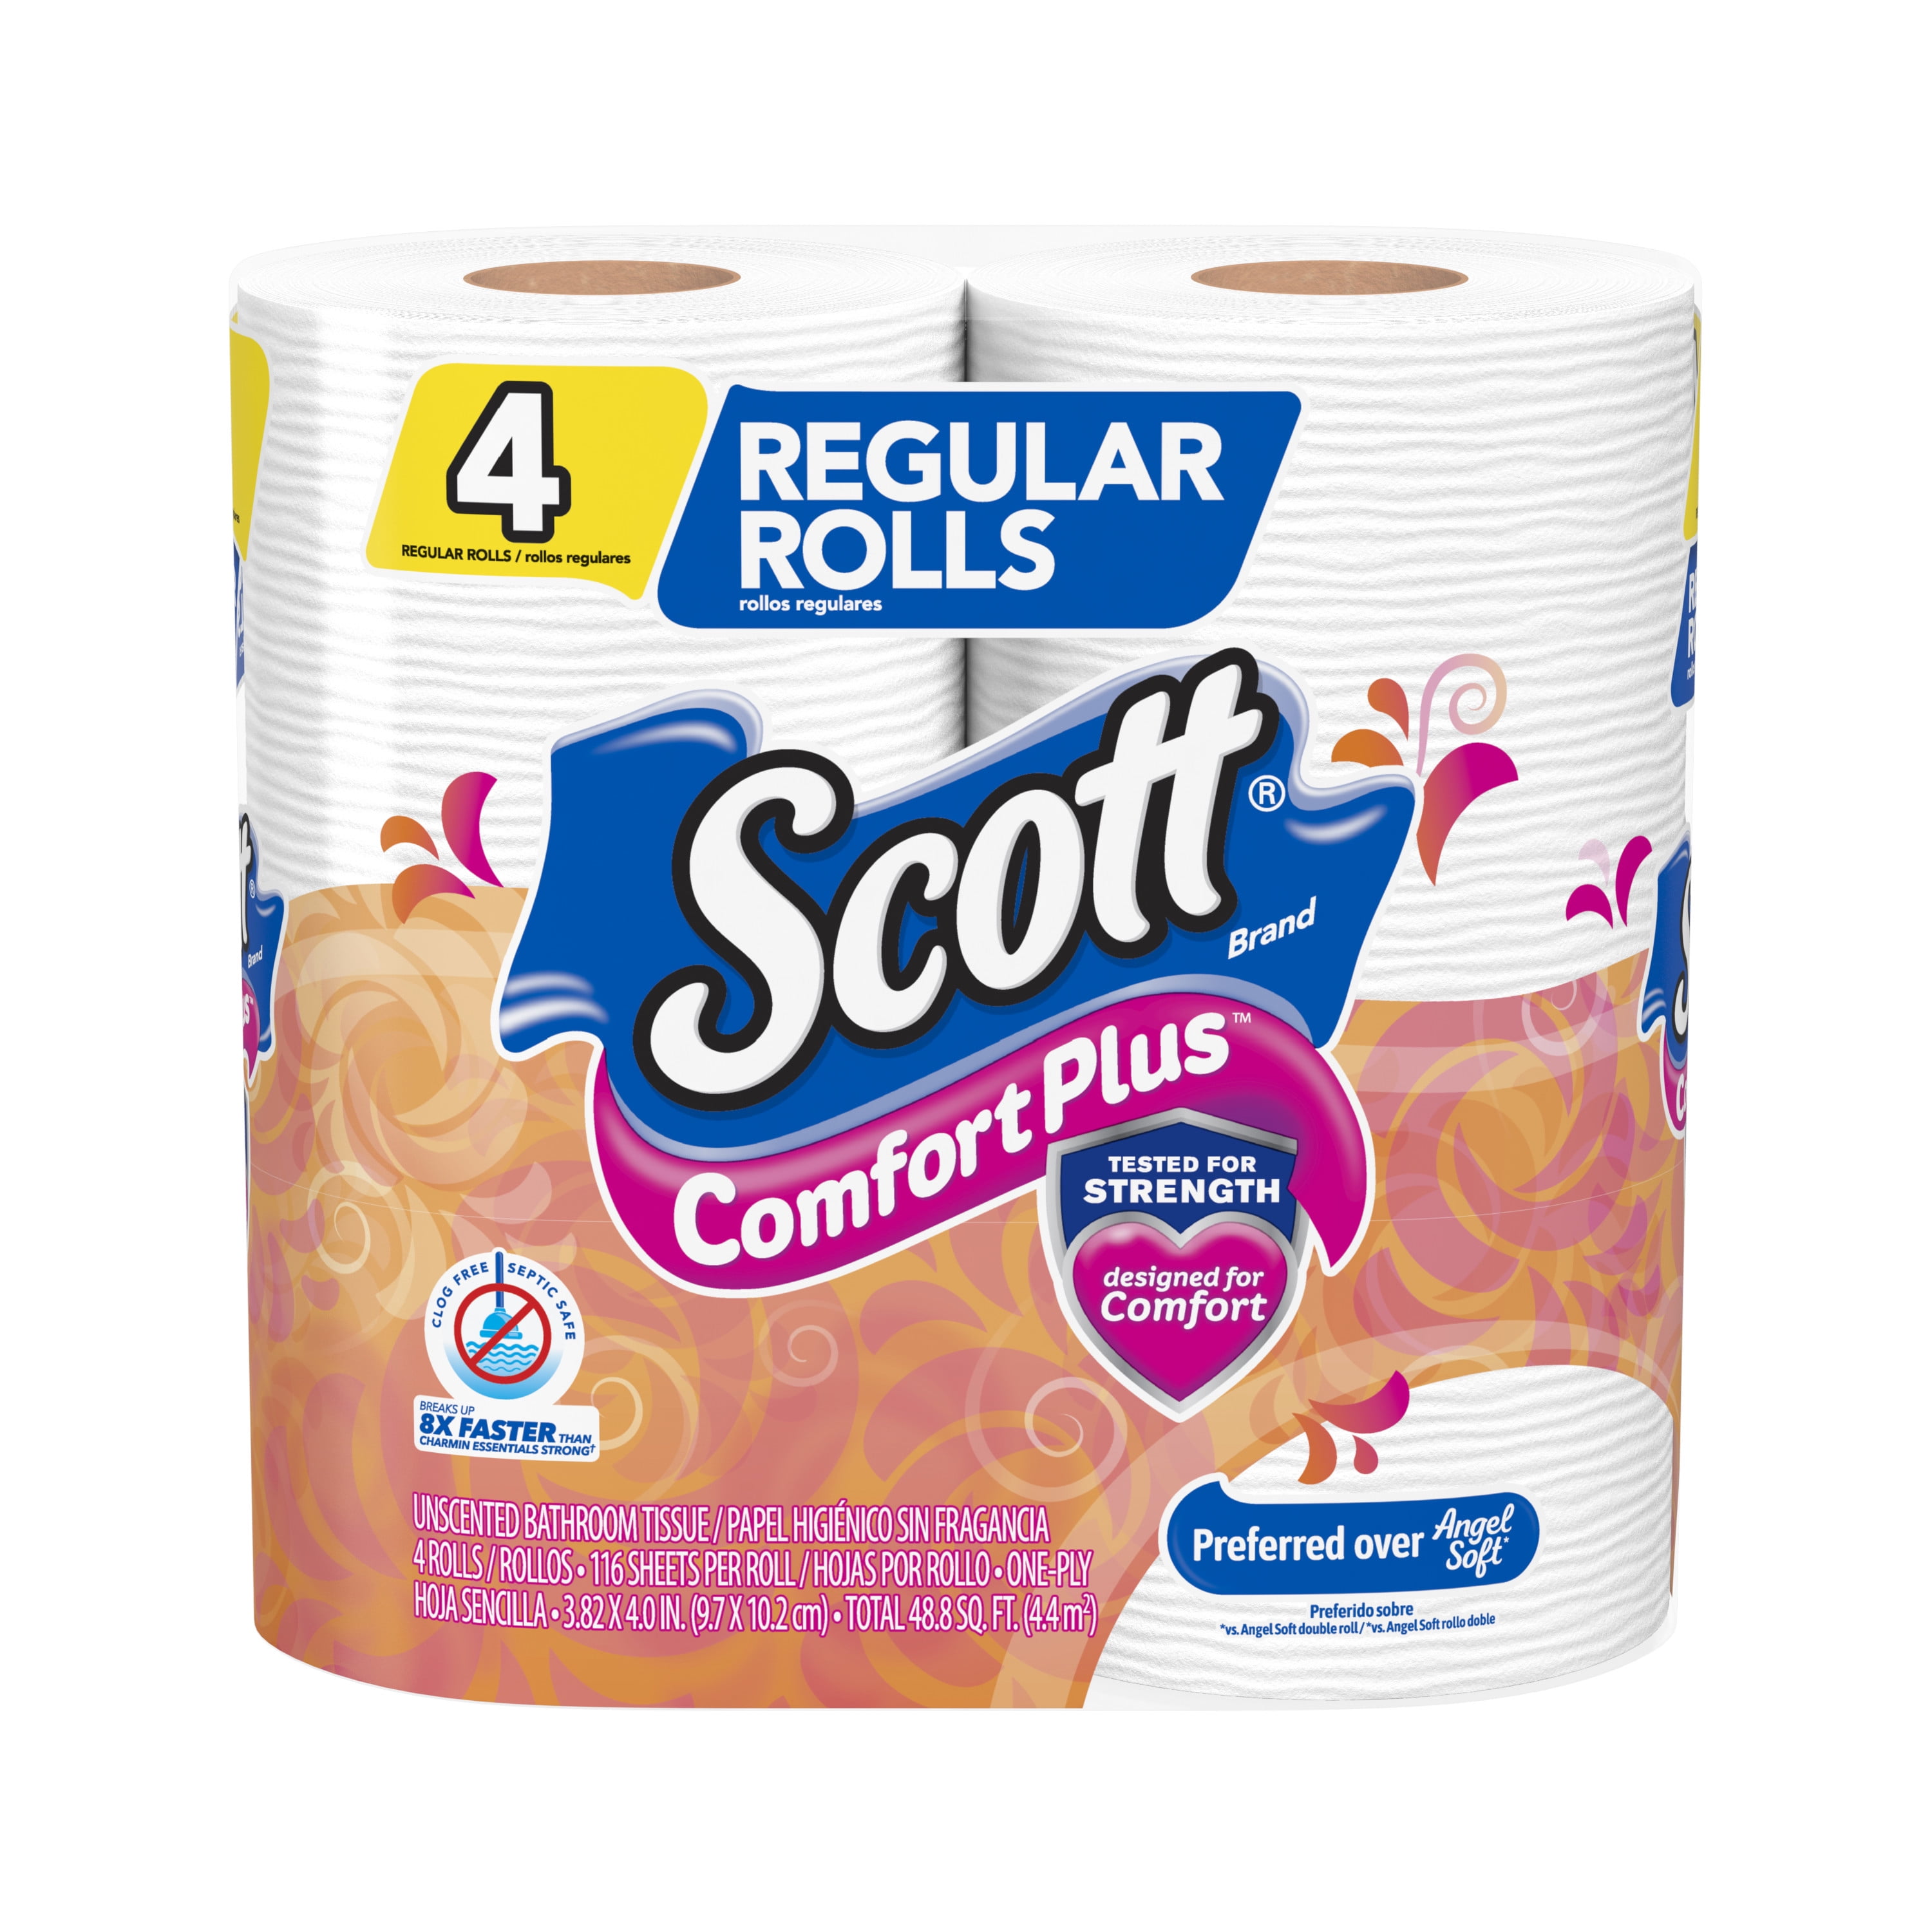 Scott Comfortplus Toilet Paper Regular Roll 4 Rolls Bath Tissue